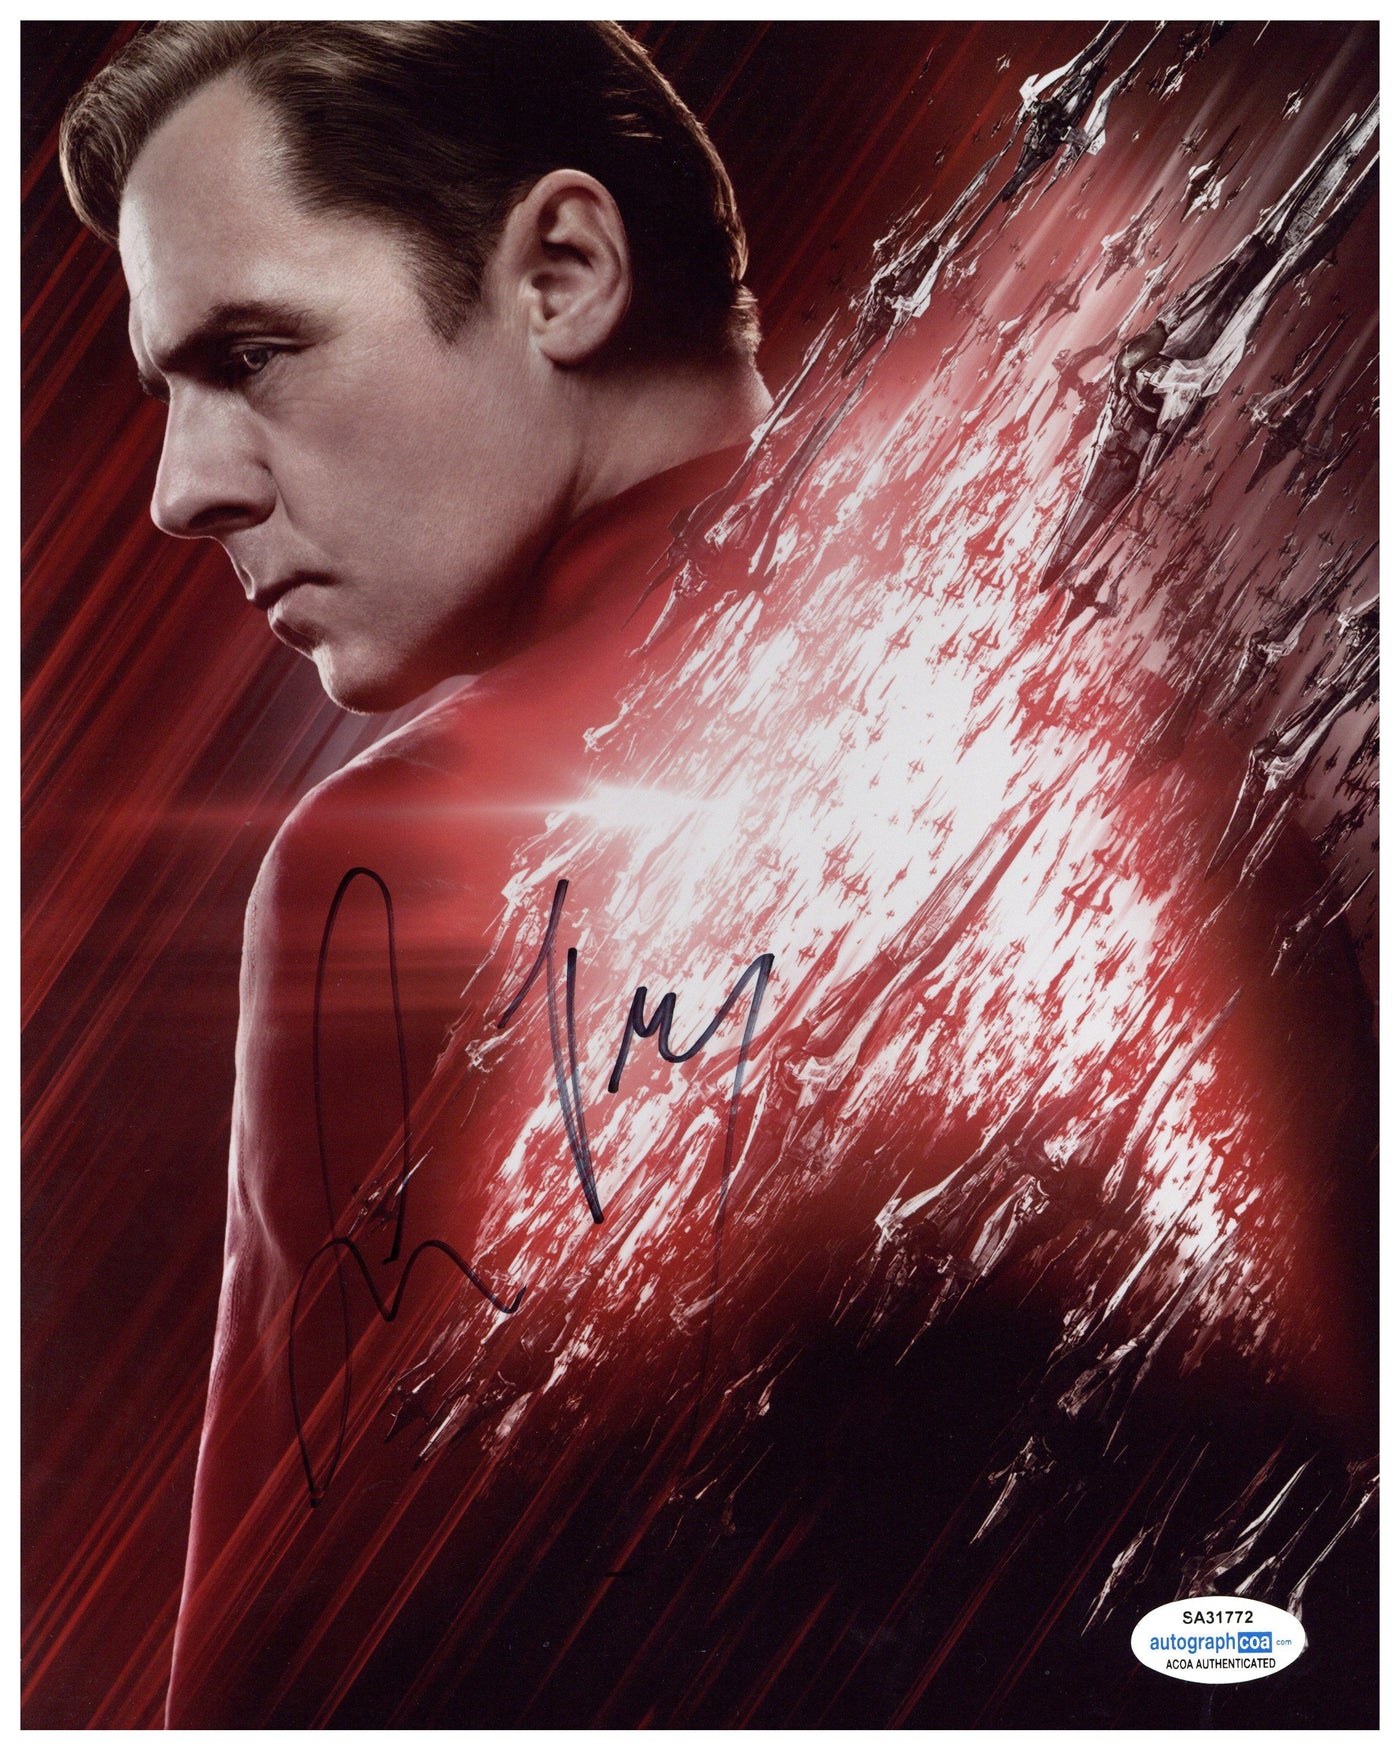 Simon Pegg Signed 8x10 Photo Star Trek Authentic Autographed AutographCOA